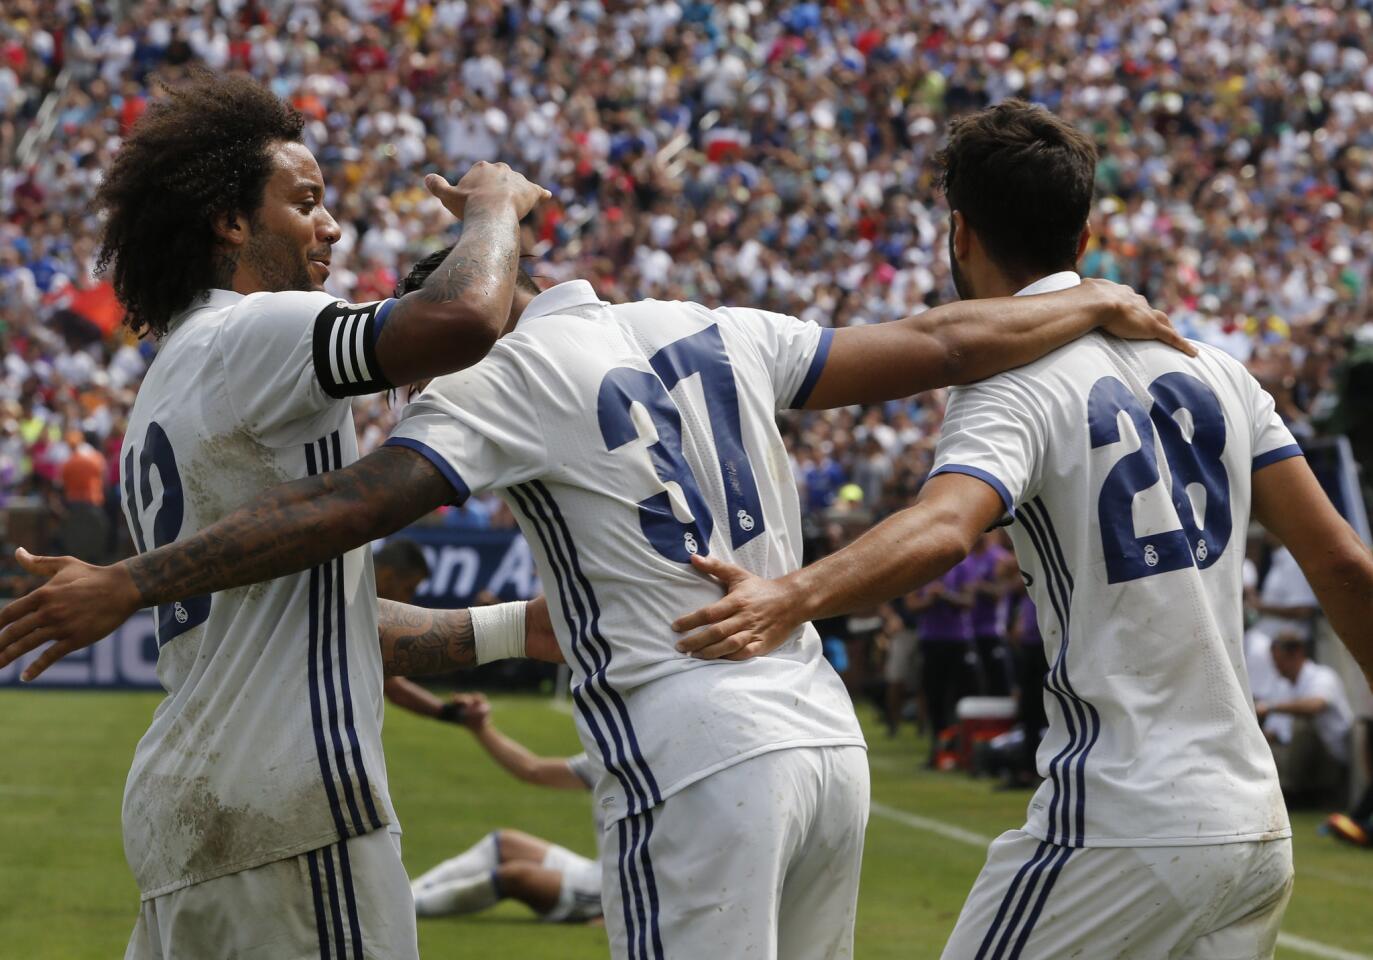 Amistoso: Real Madrid 3-2 Chelsea